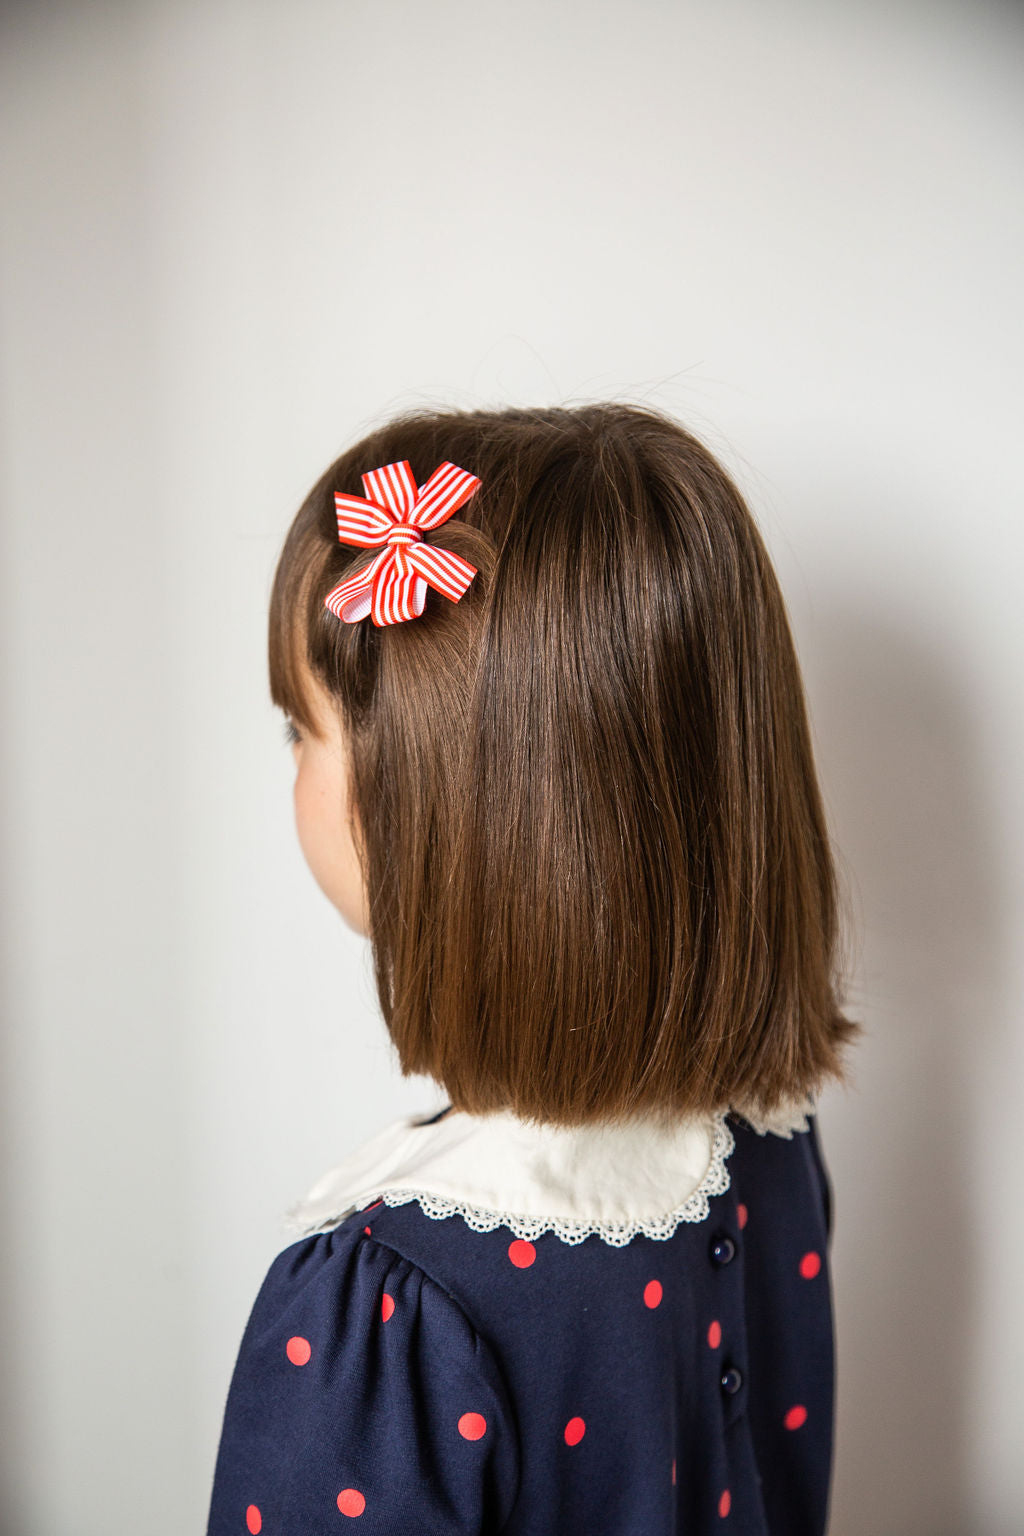 Medium Striped Bow Hair Clip Pink Rose Girl - Barrette Anti-Glisse Noeud Moyen Fille Rose